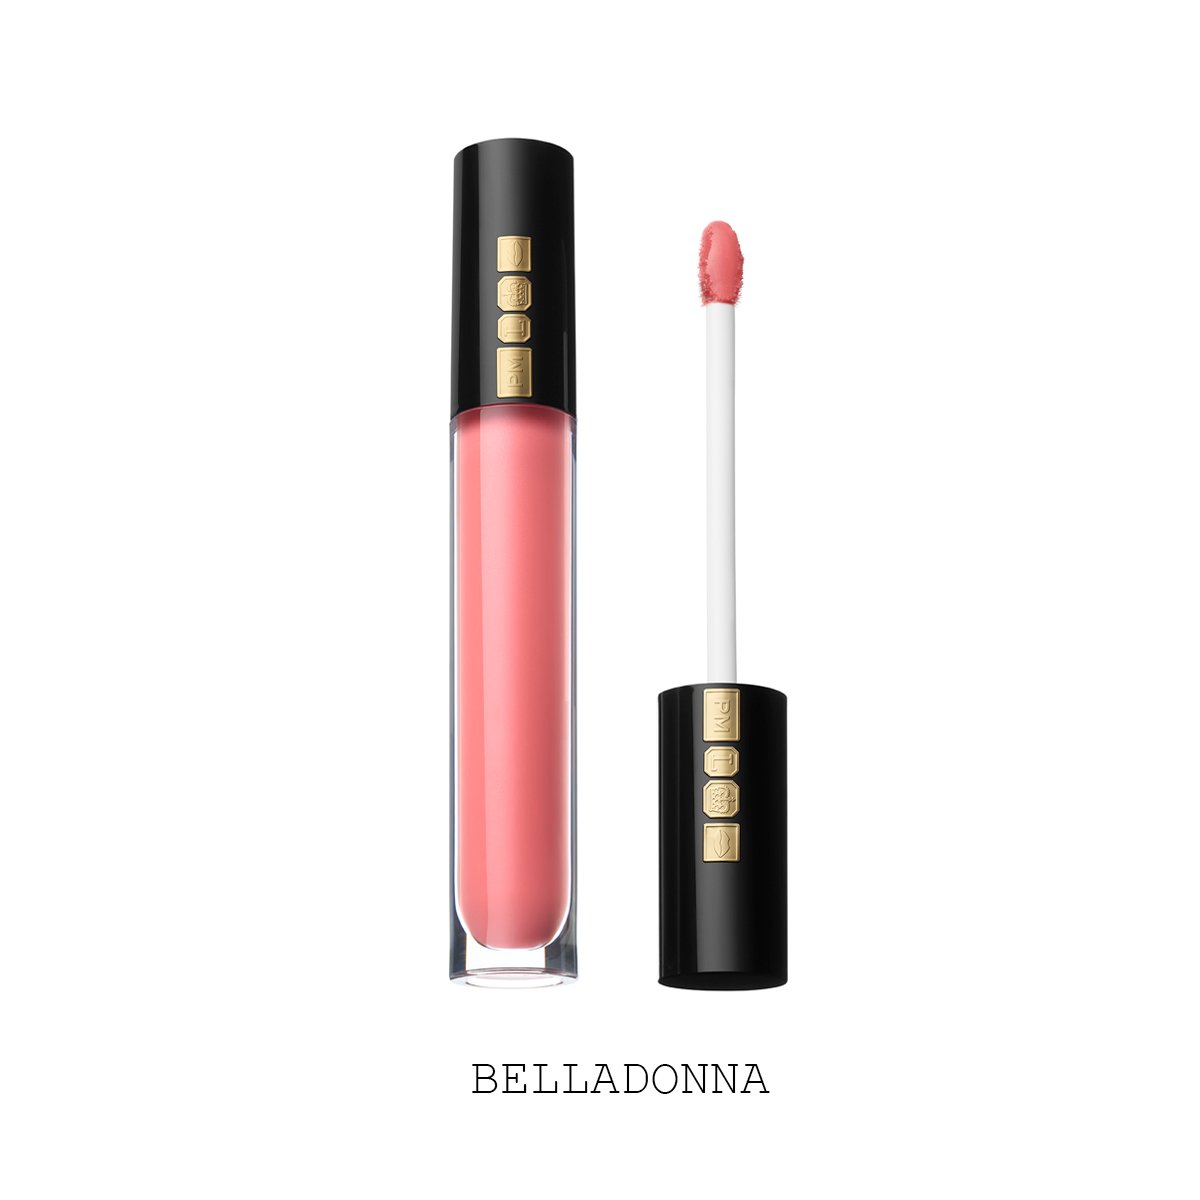 Pat McGrath Lust: Gloss Lip Gloss  - Belladonna (Soft Coral with Pink Pearl)